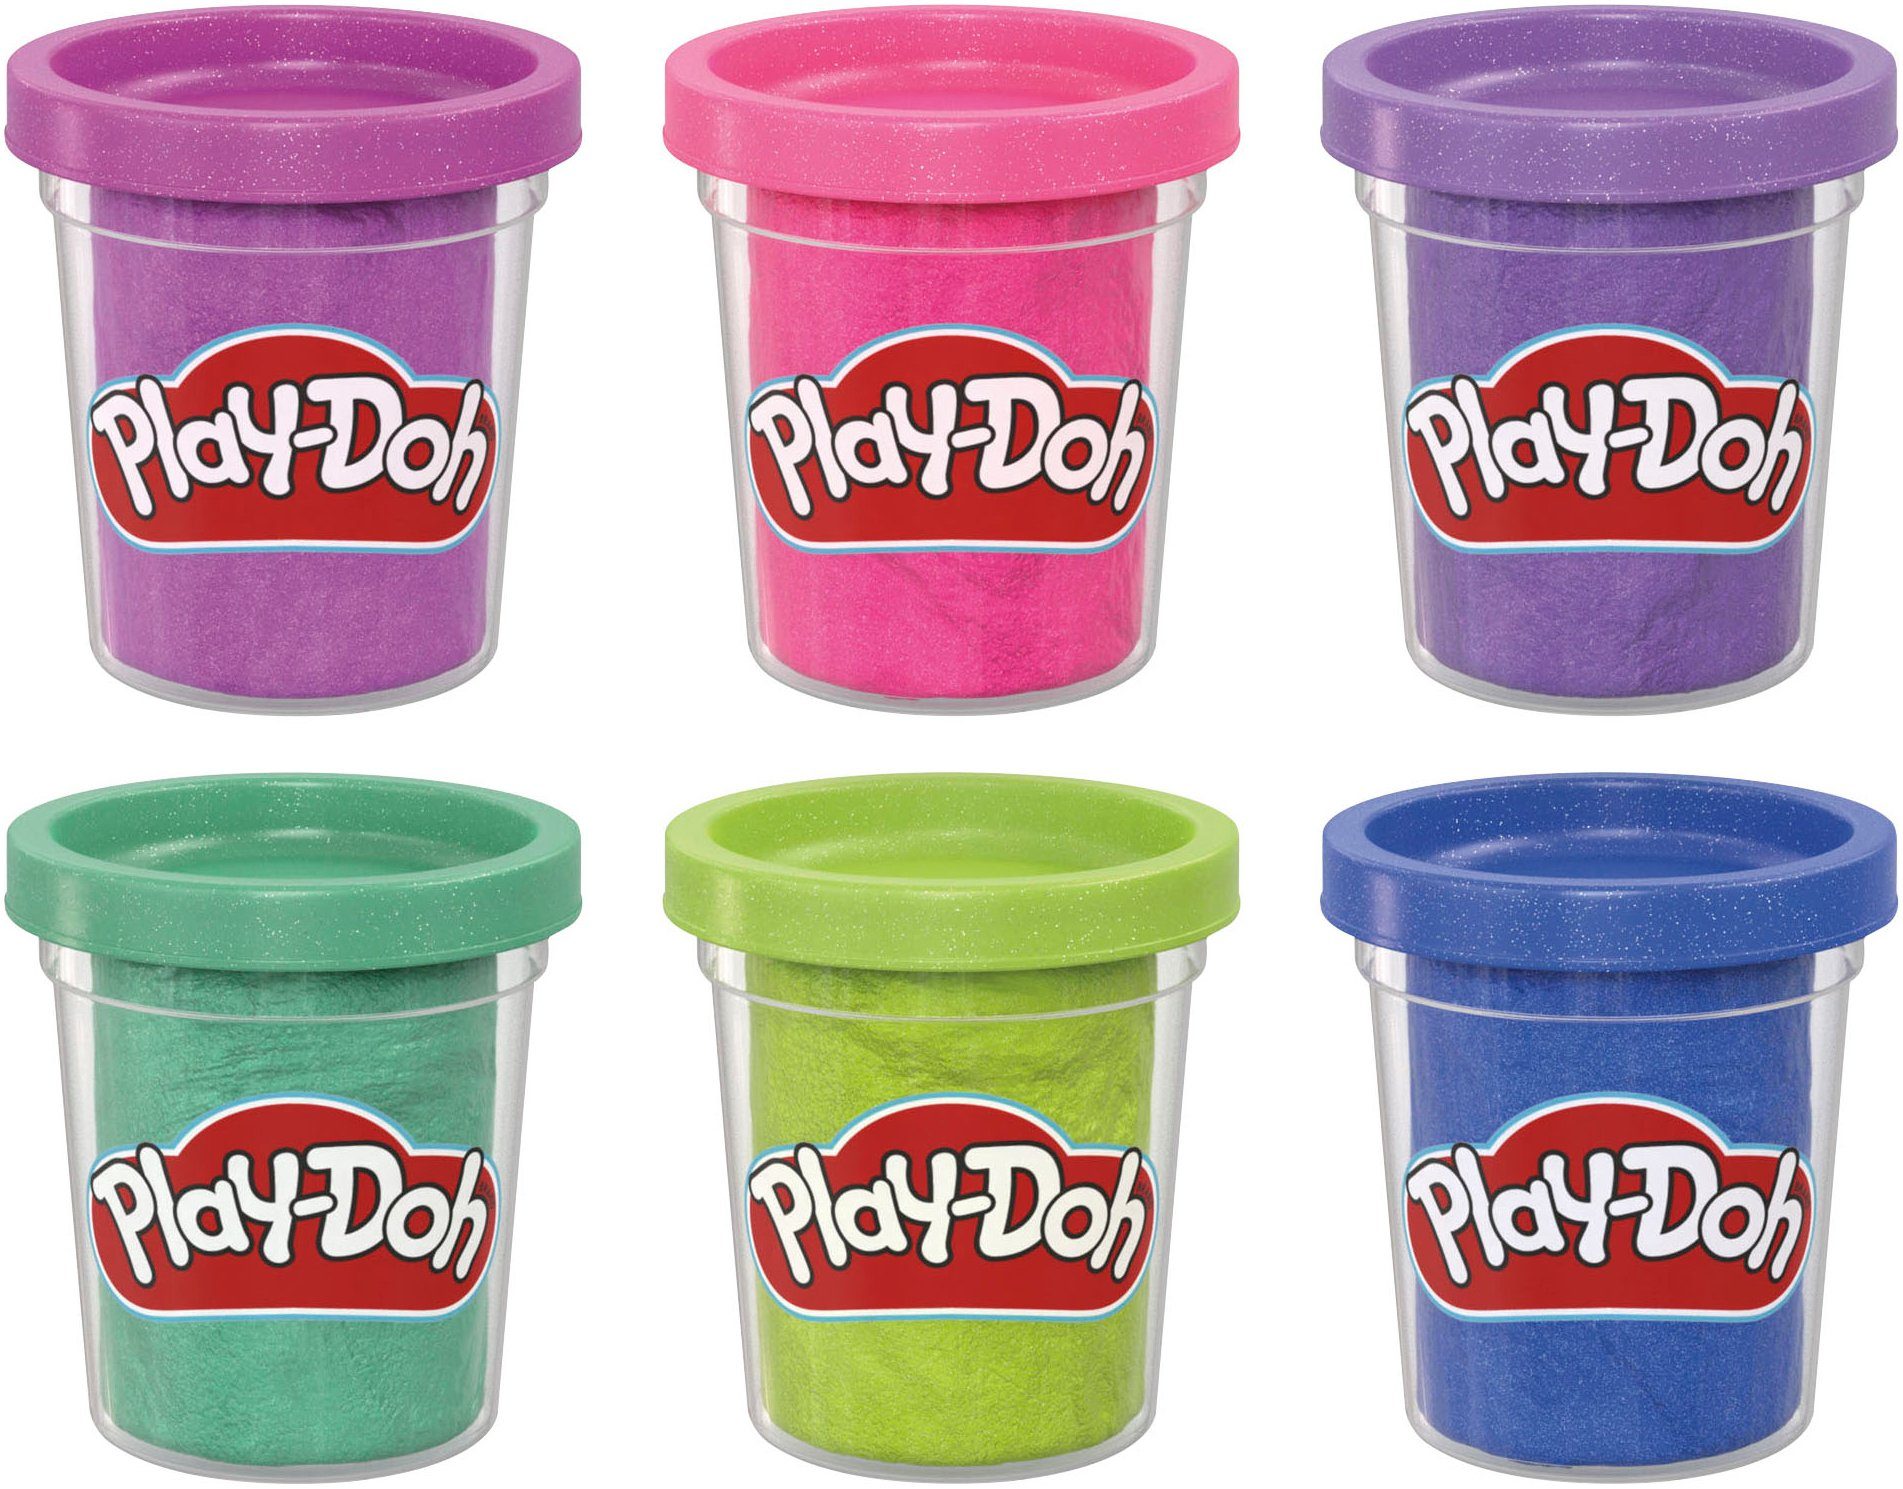 Hasbro Play-Doh Play-Doh, Funkelknete